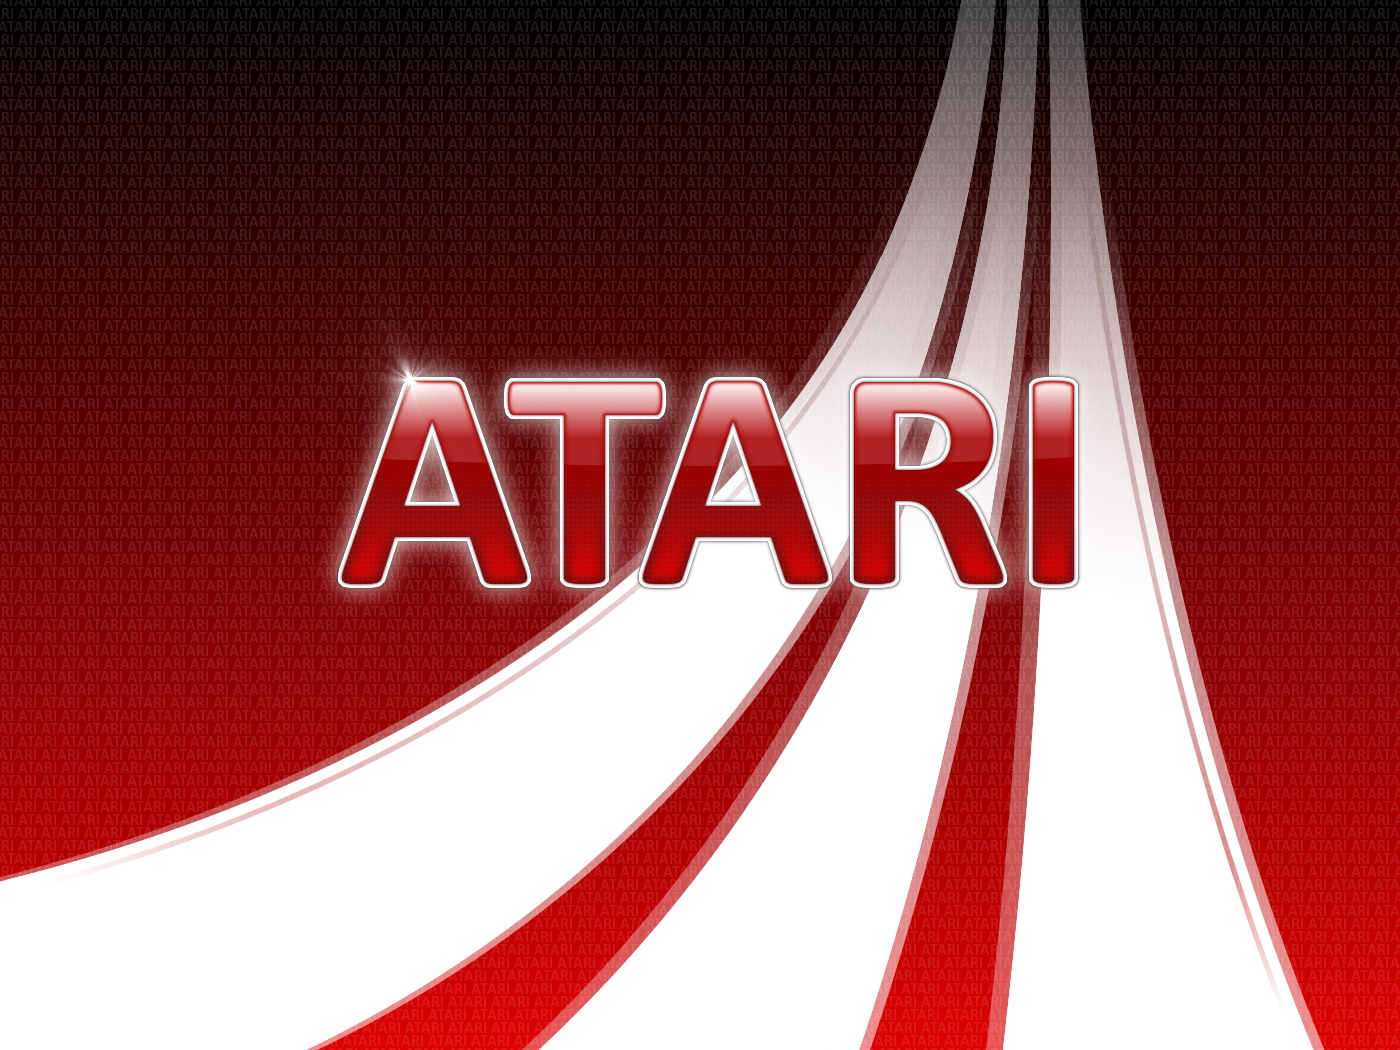 atariwallpaper7737694a  Atari 2600 wallpaper 4x3 1024x7  Flickr